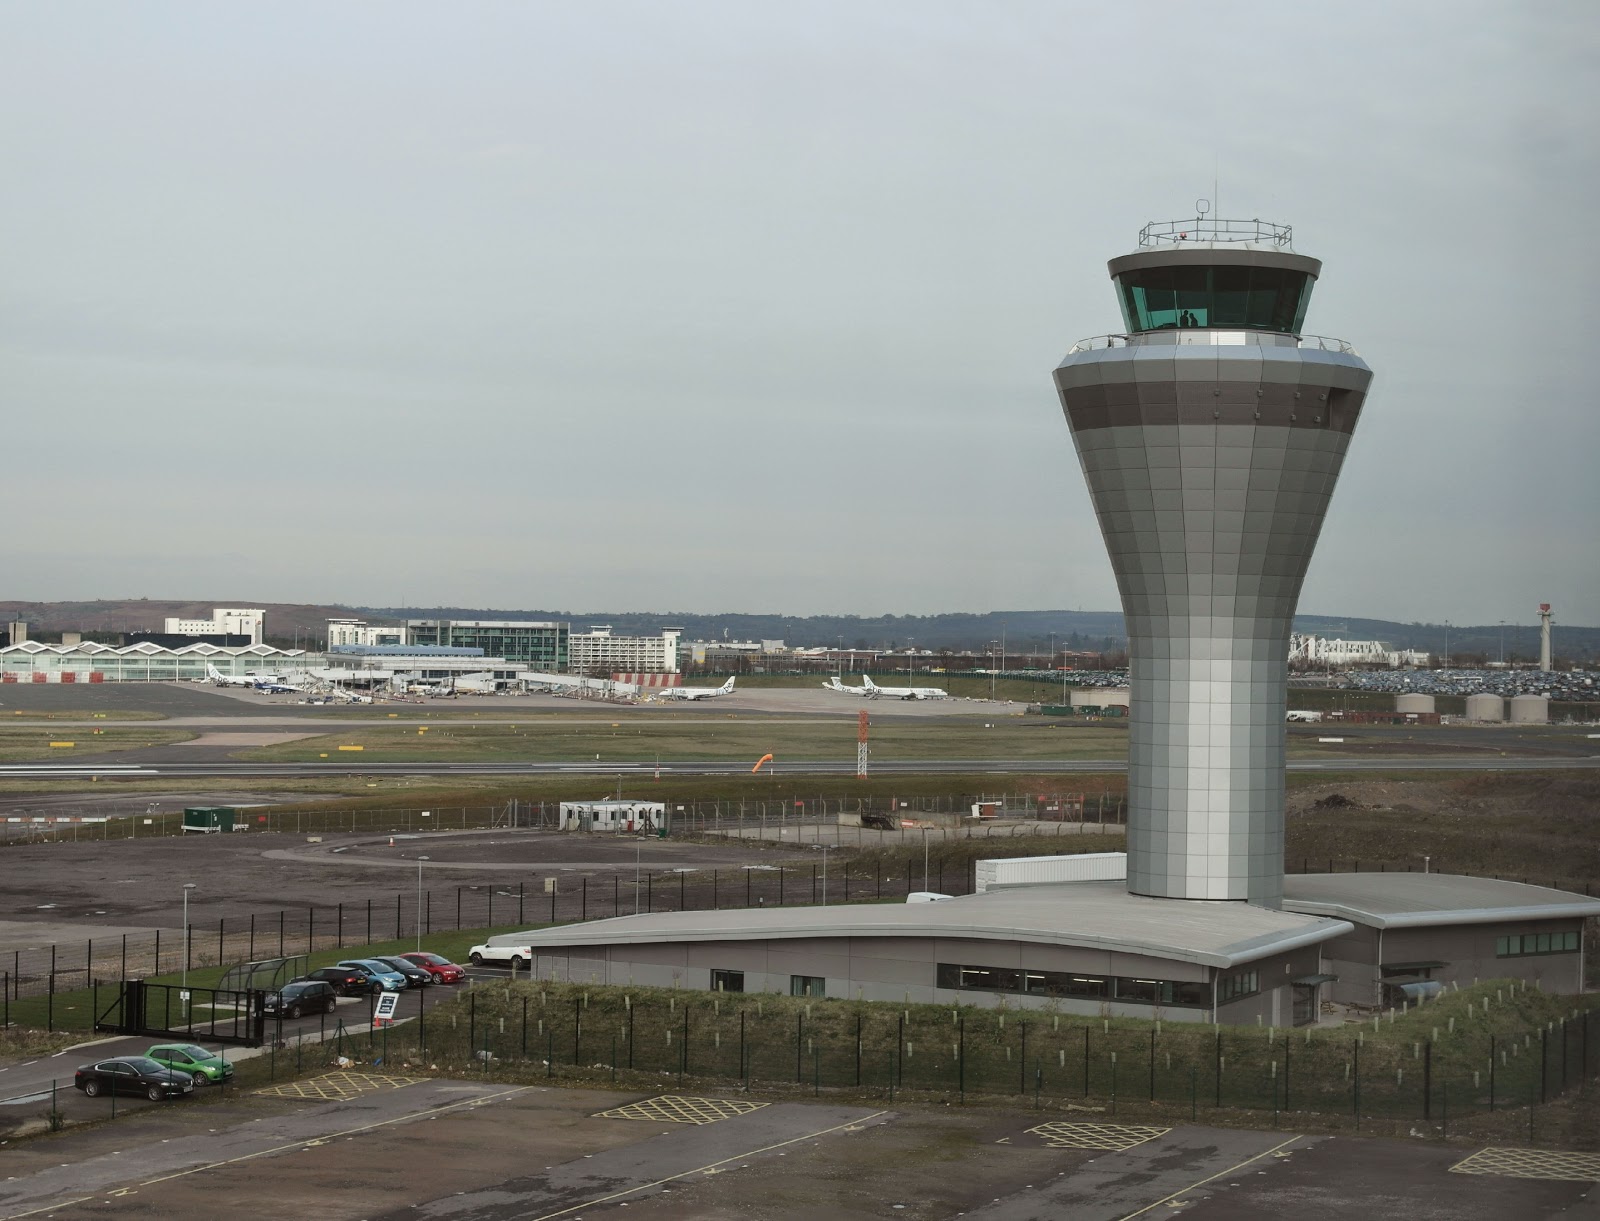 Travelodge Birmingham Airport runway view